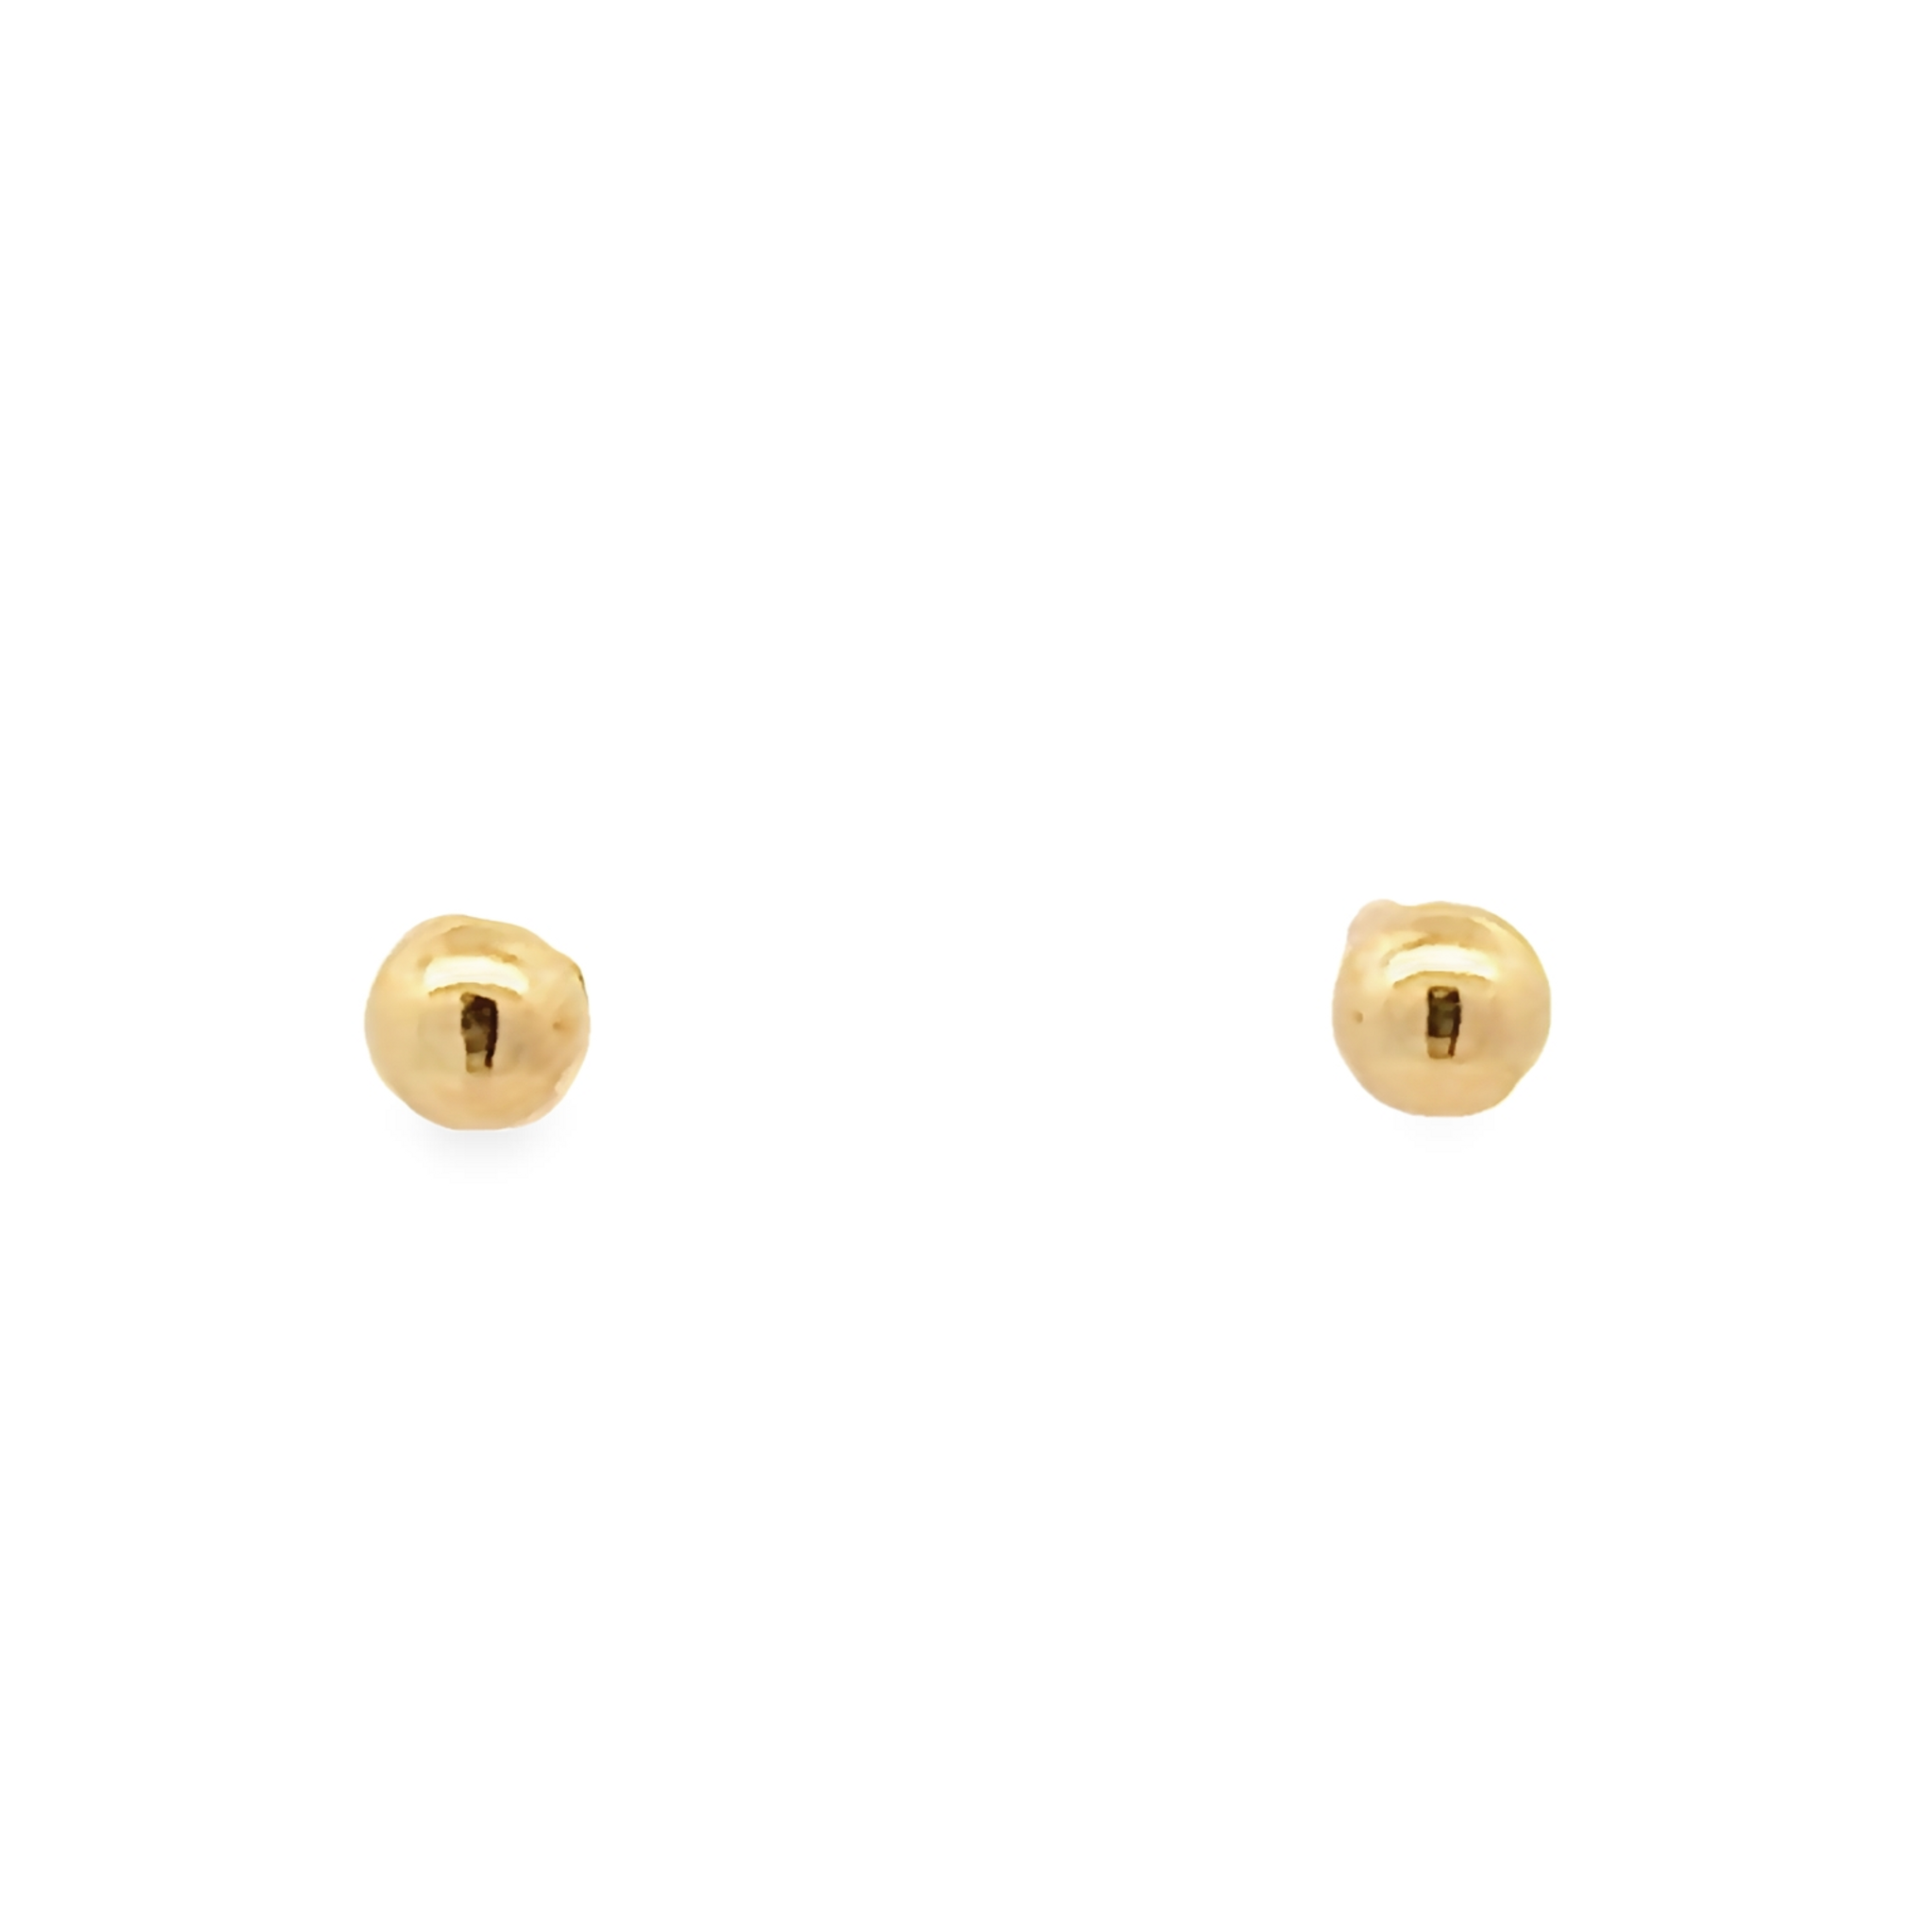 4mm 14k Yellow Gold Ball Stud Earrings